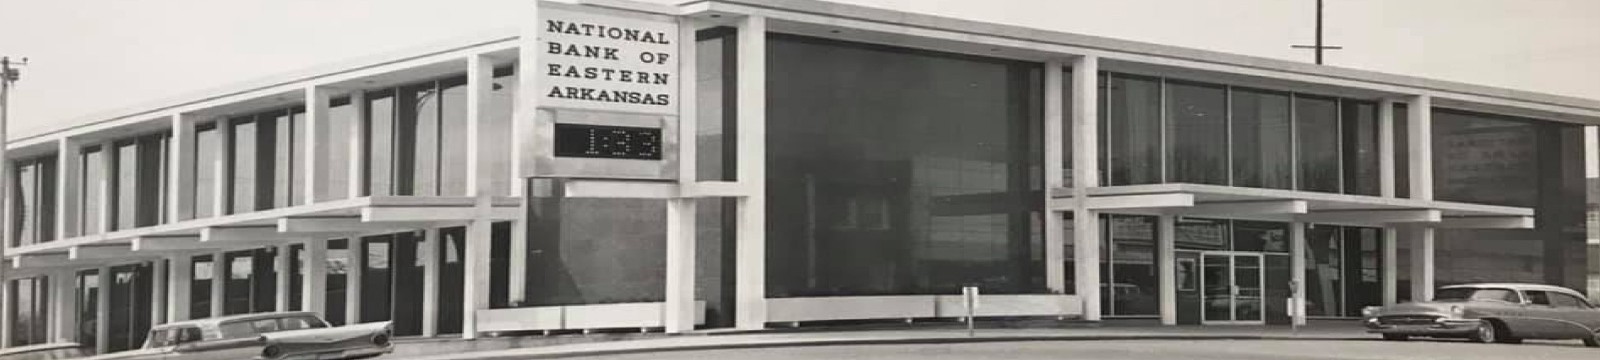 national bank of eastern arkansas building